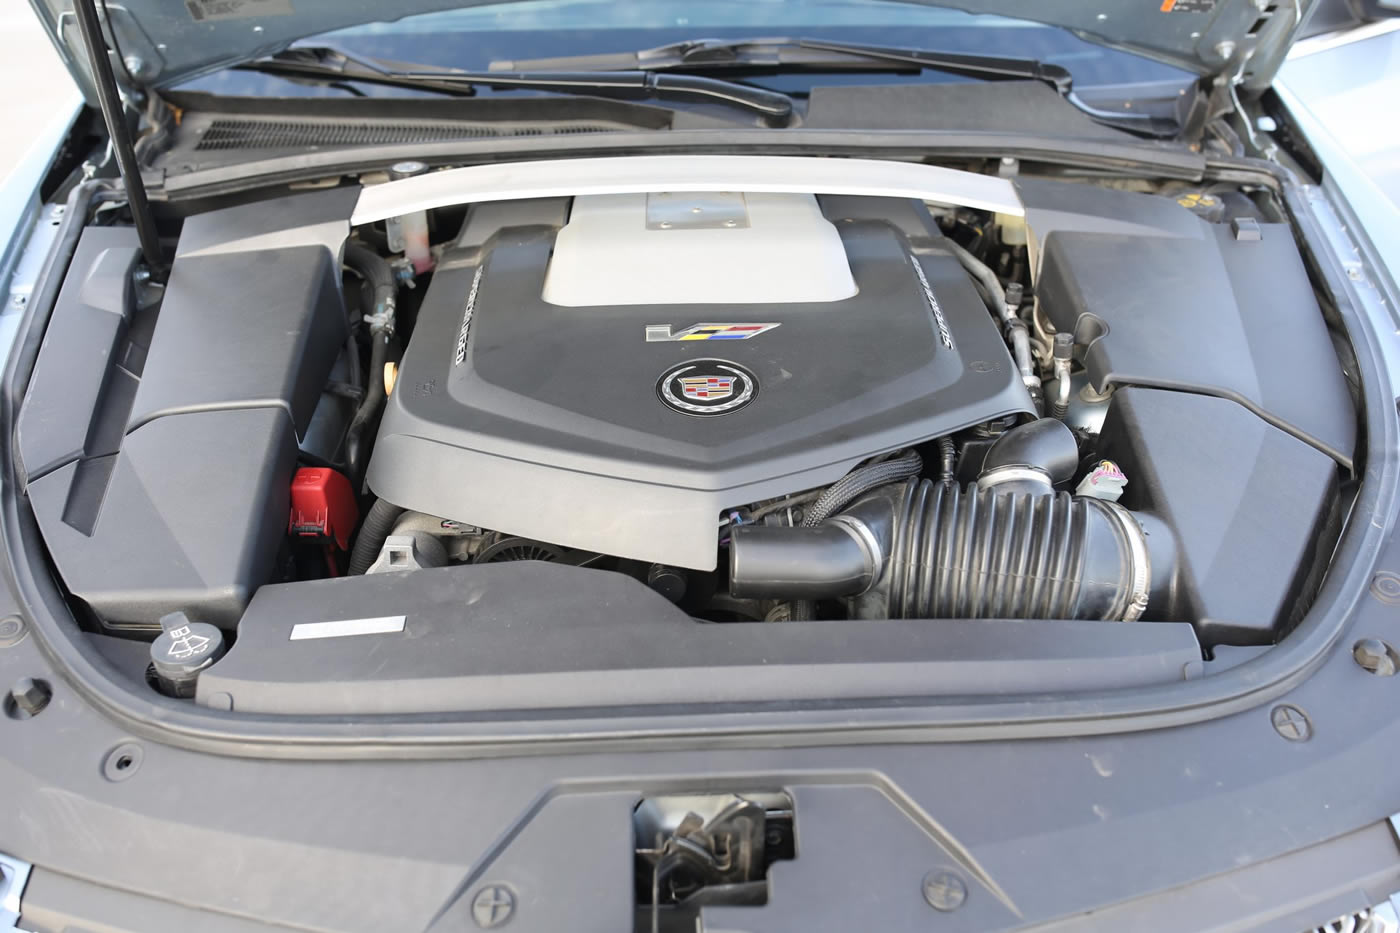 2014 Cadillac CTS-V Wagon 6-Speed in Glacier Blue Metallic